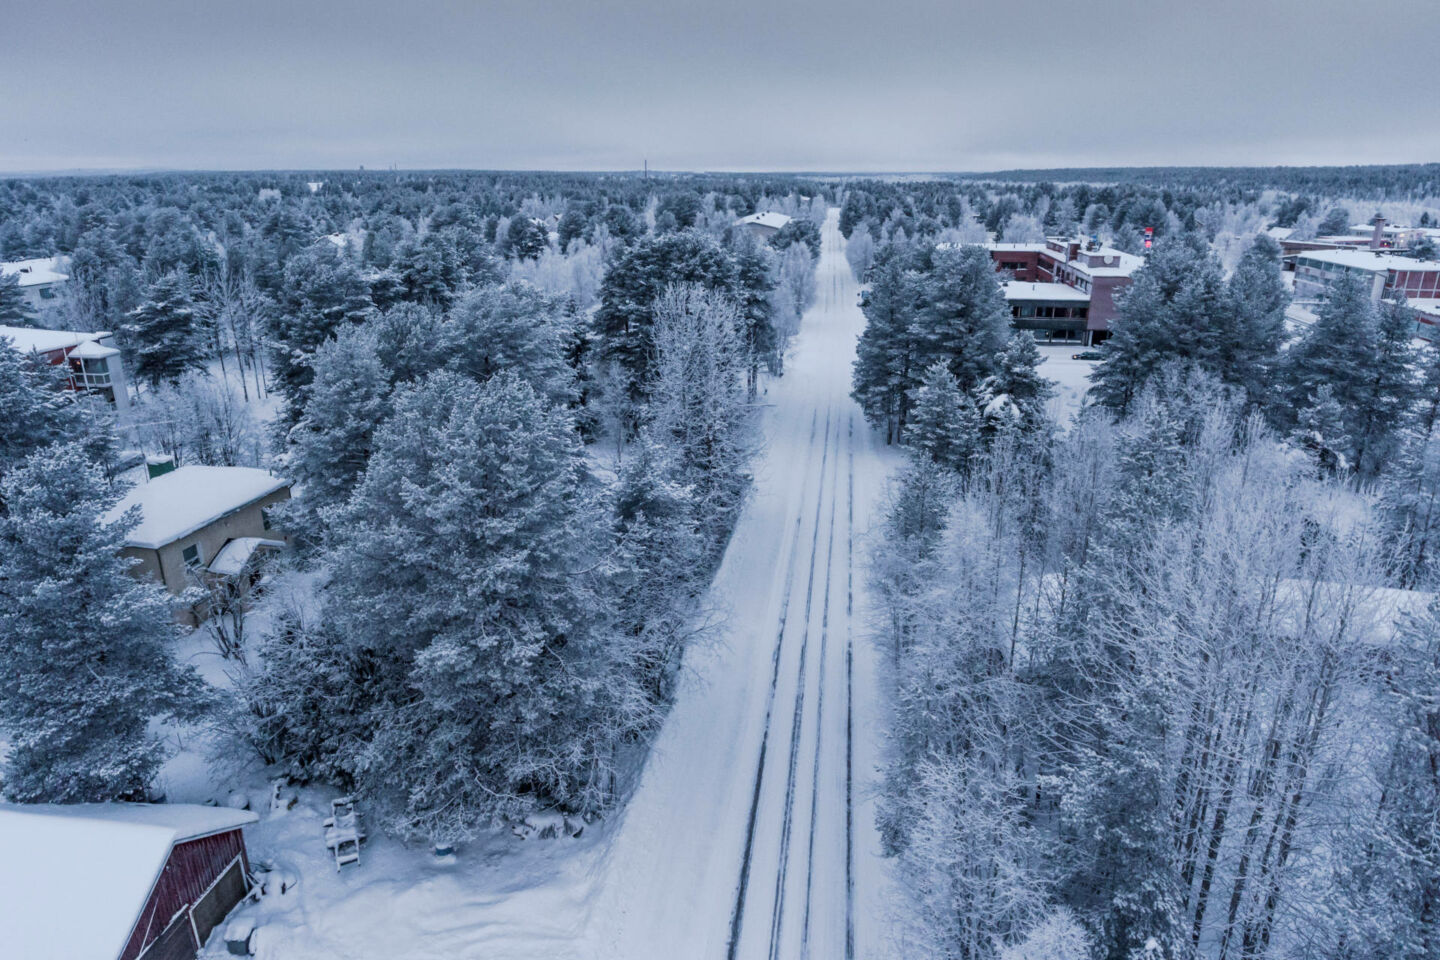 Sodankylä, Finland in winter, a stand-in location for Siberia